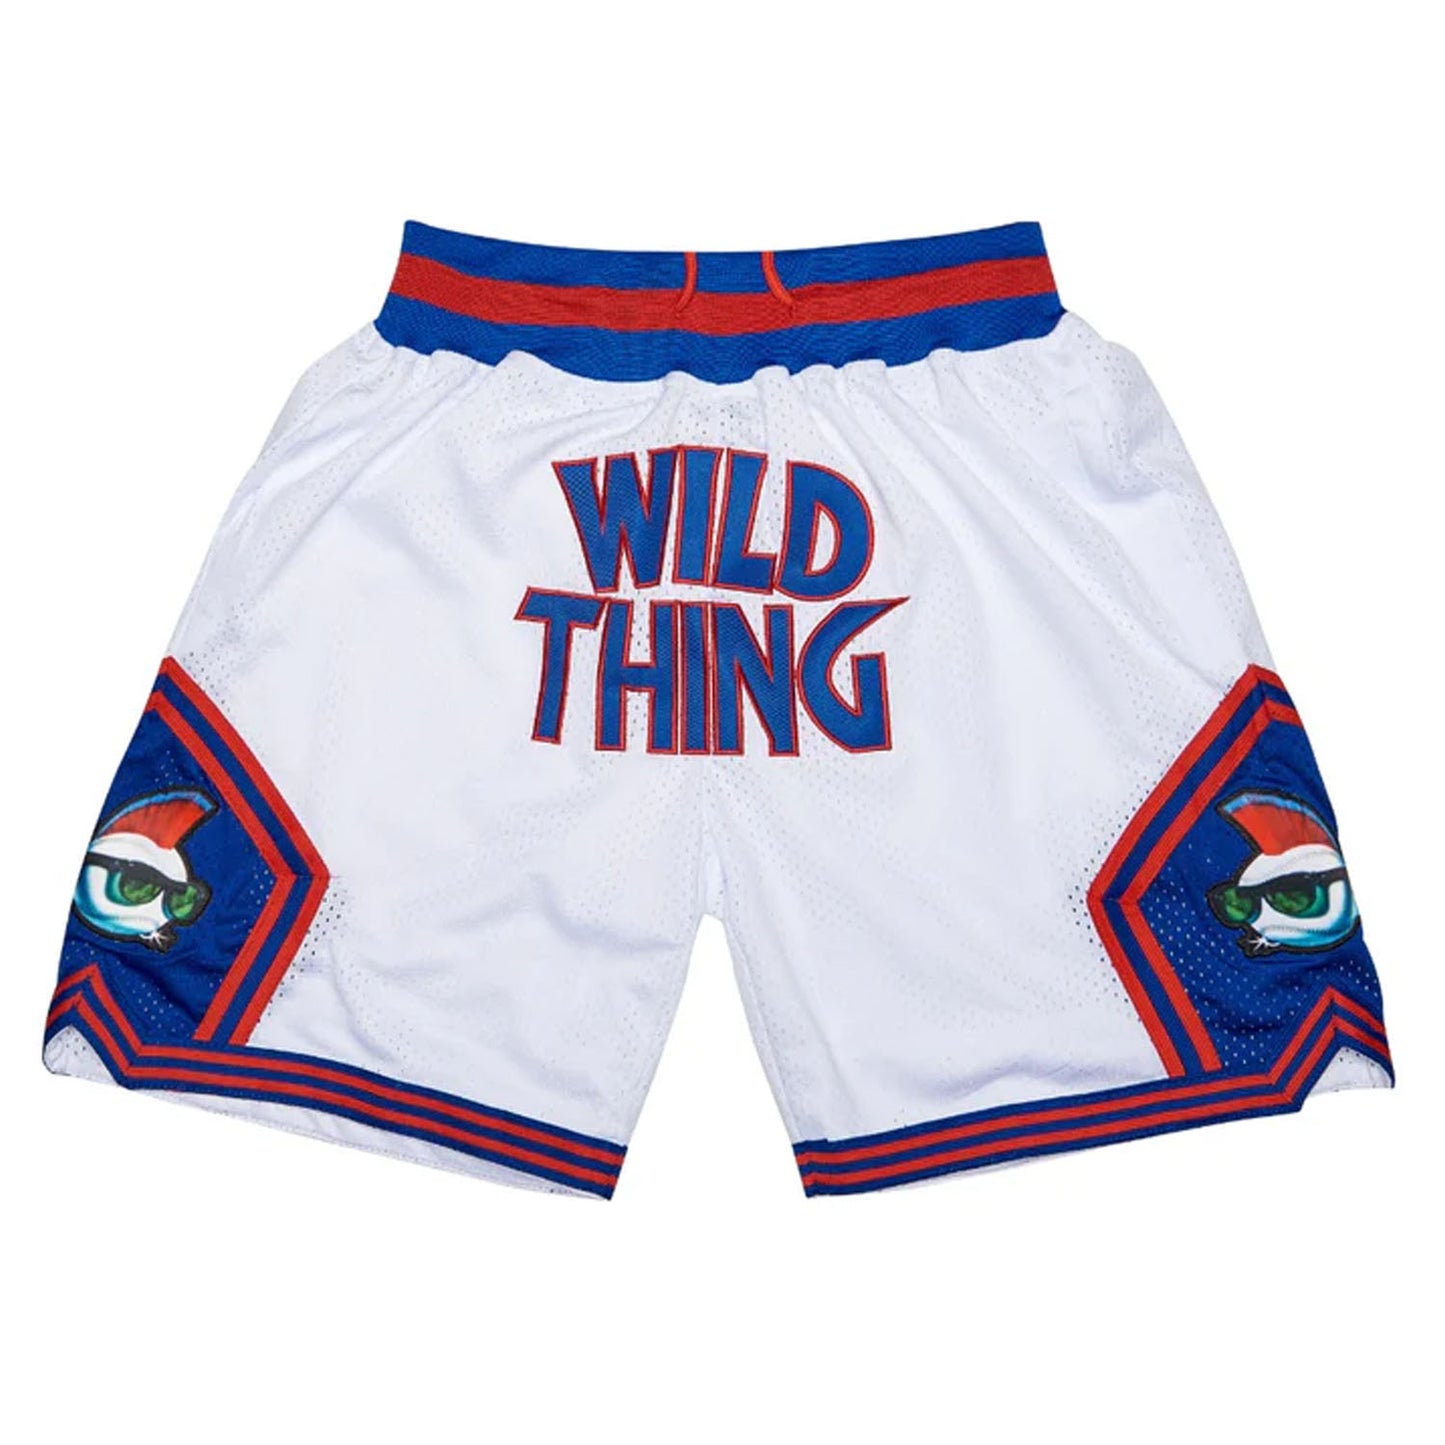 Major League Ricky 'Wild Thing' Vaughn Basketball Shorts